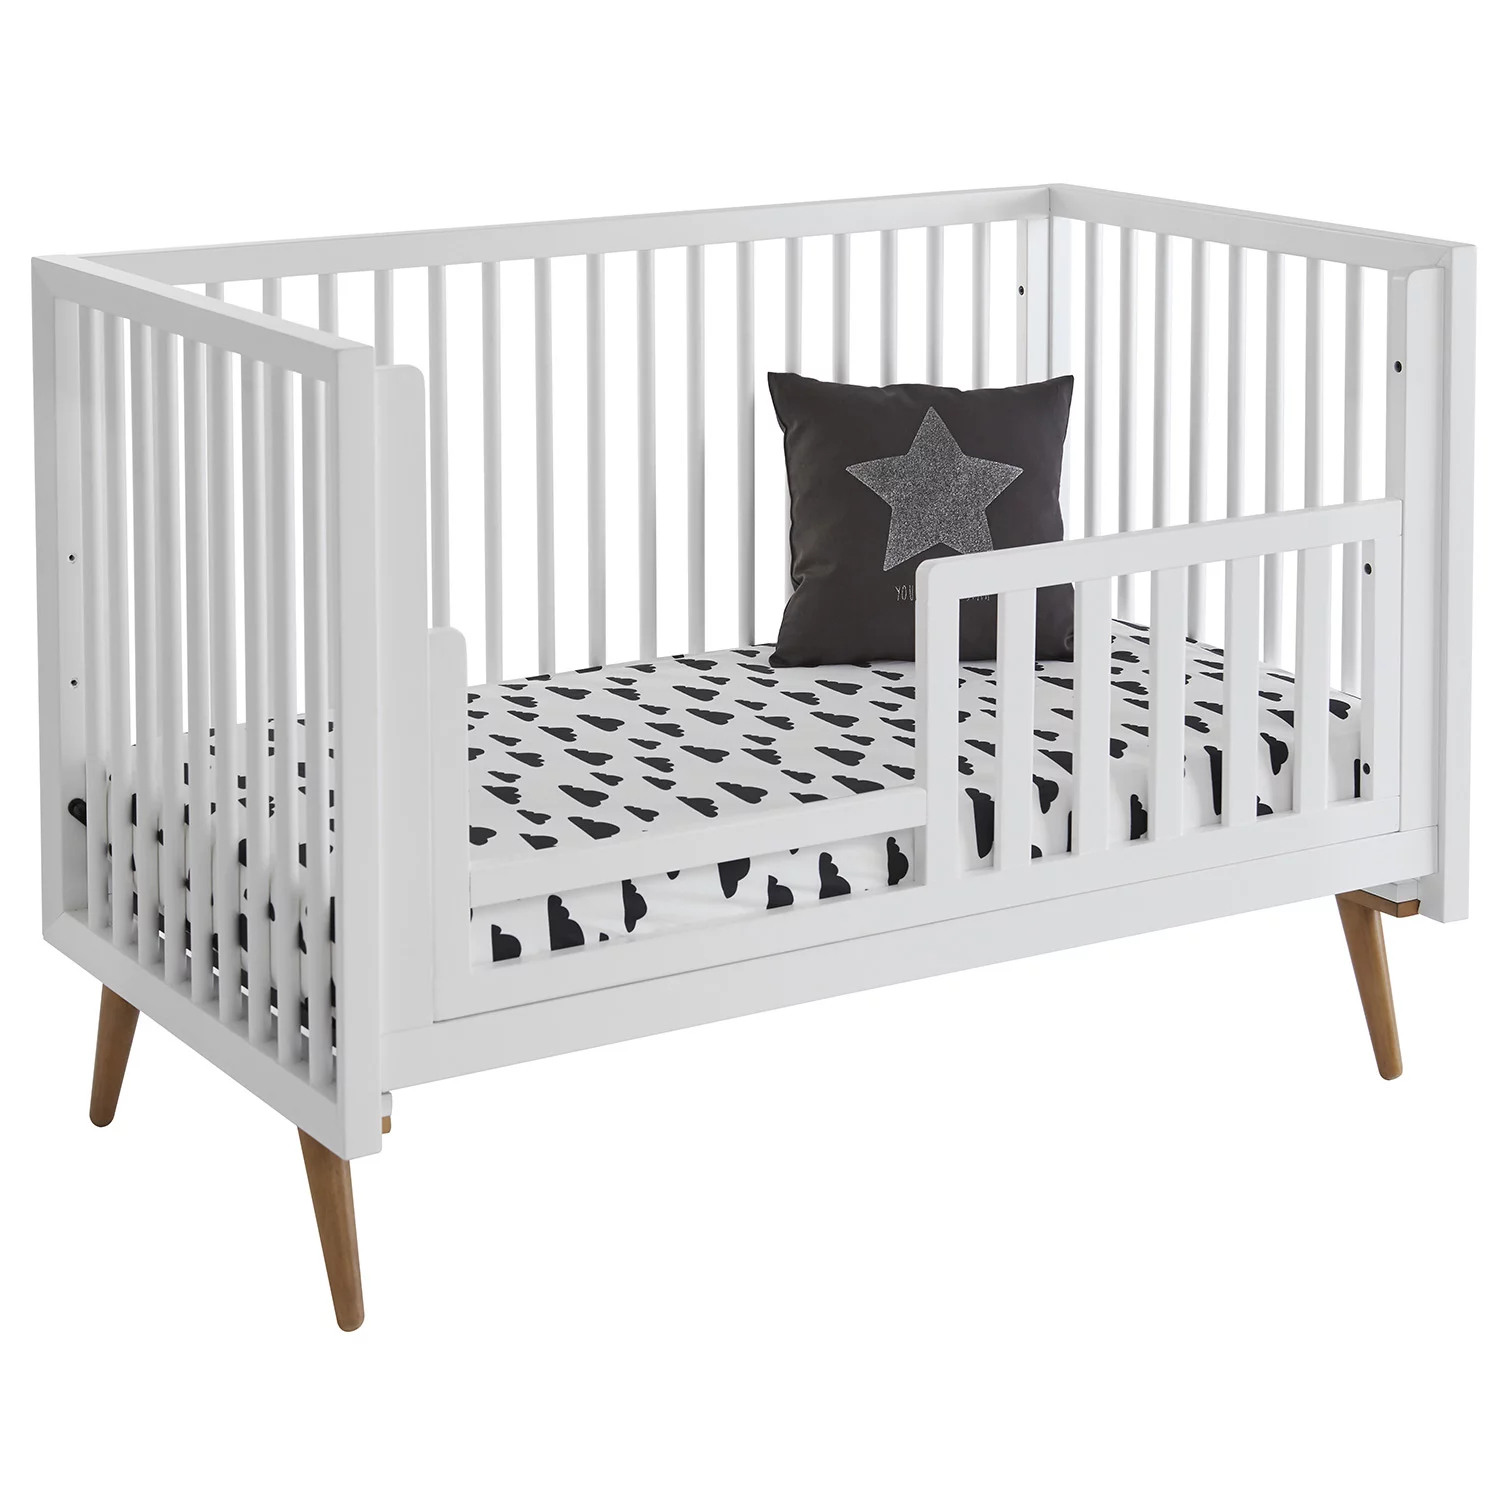 Factory made newborn crib bed luxury wooden modern baby cribs